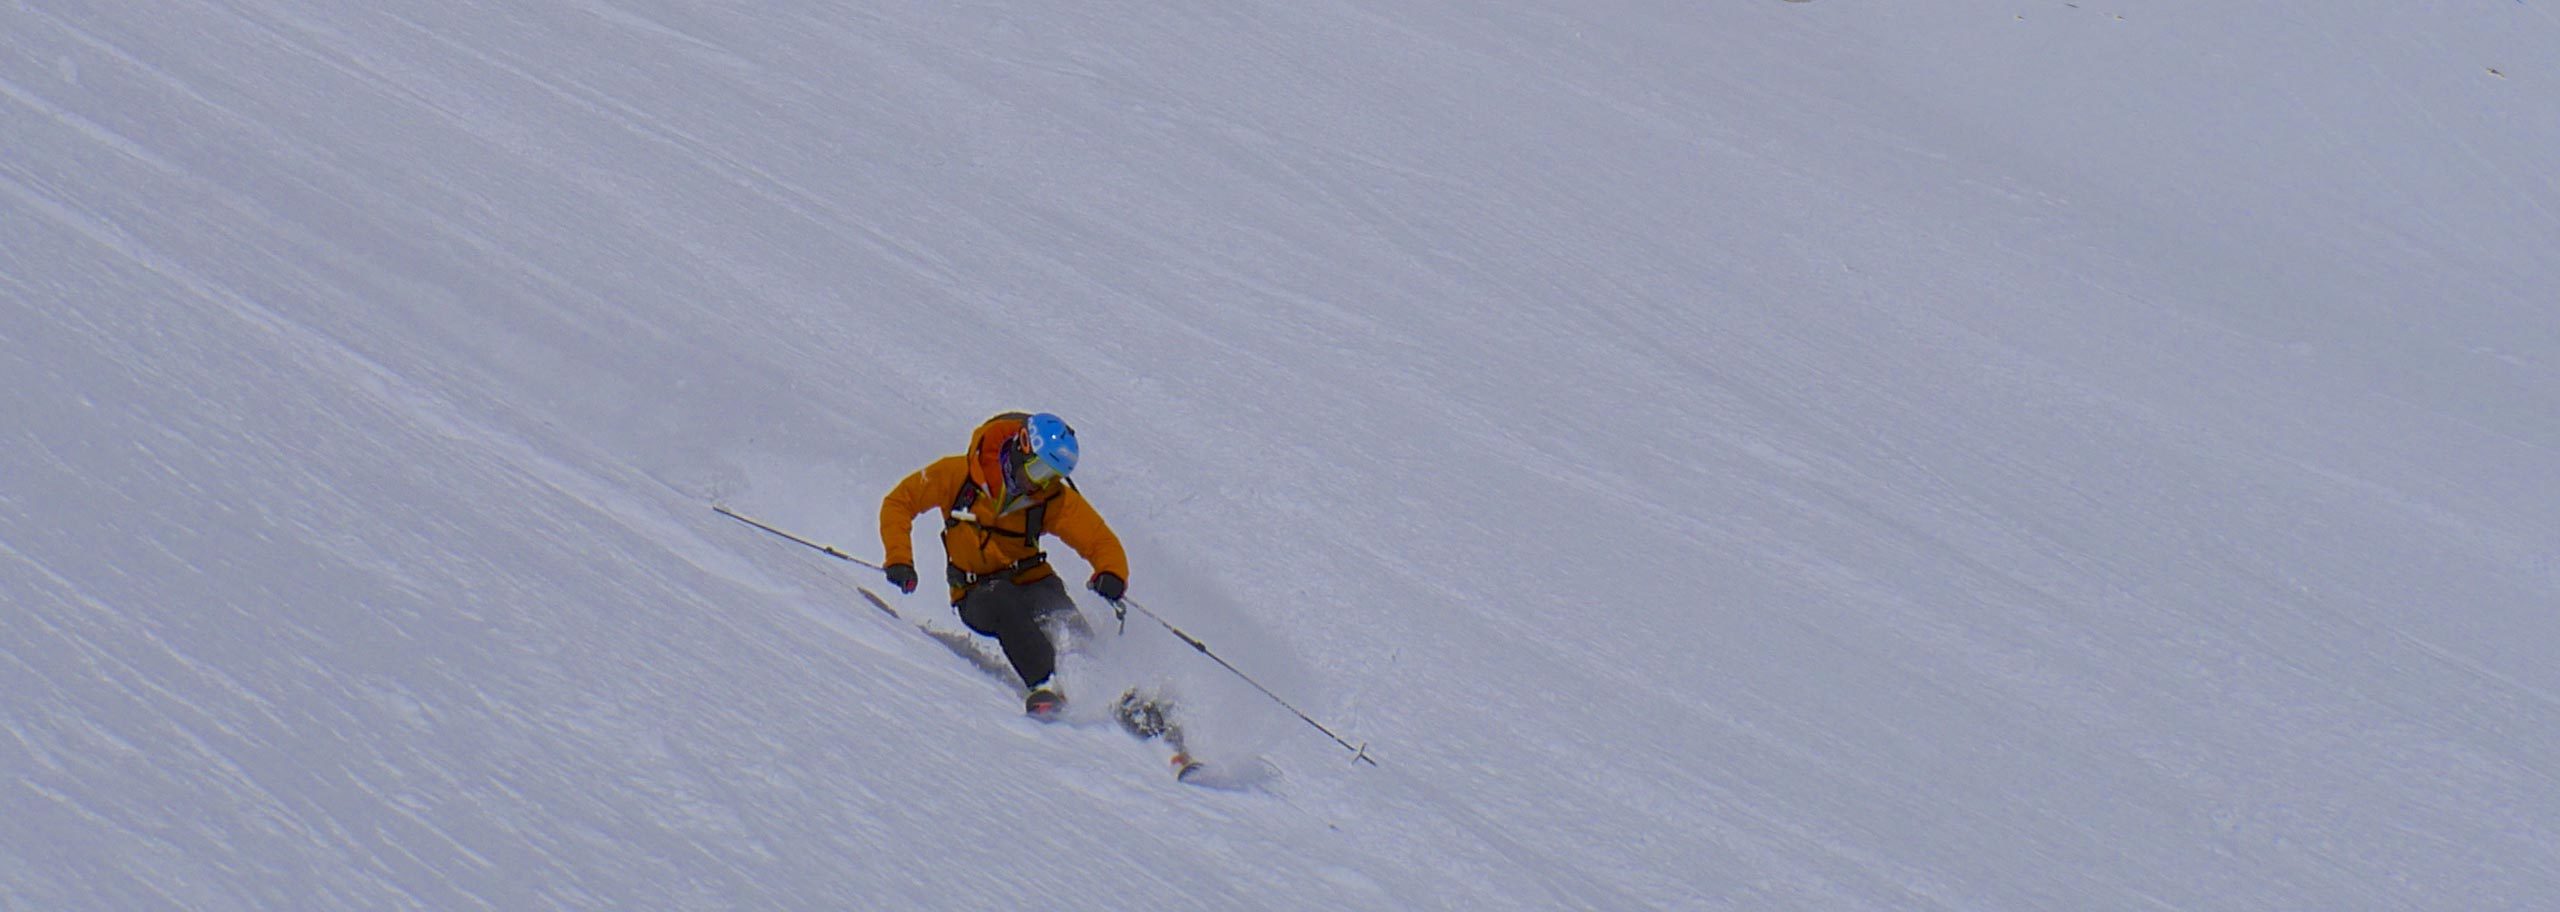 Off-piste Skiing in Limone Piemonte, Guided Freeride Skiing